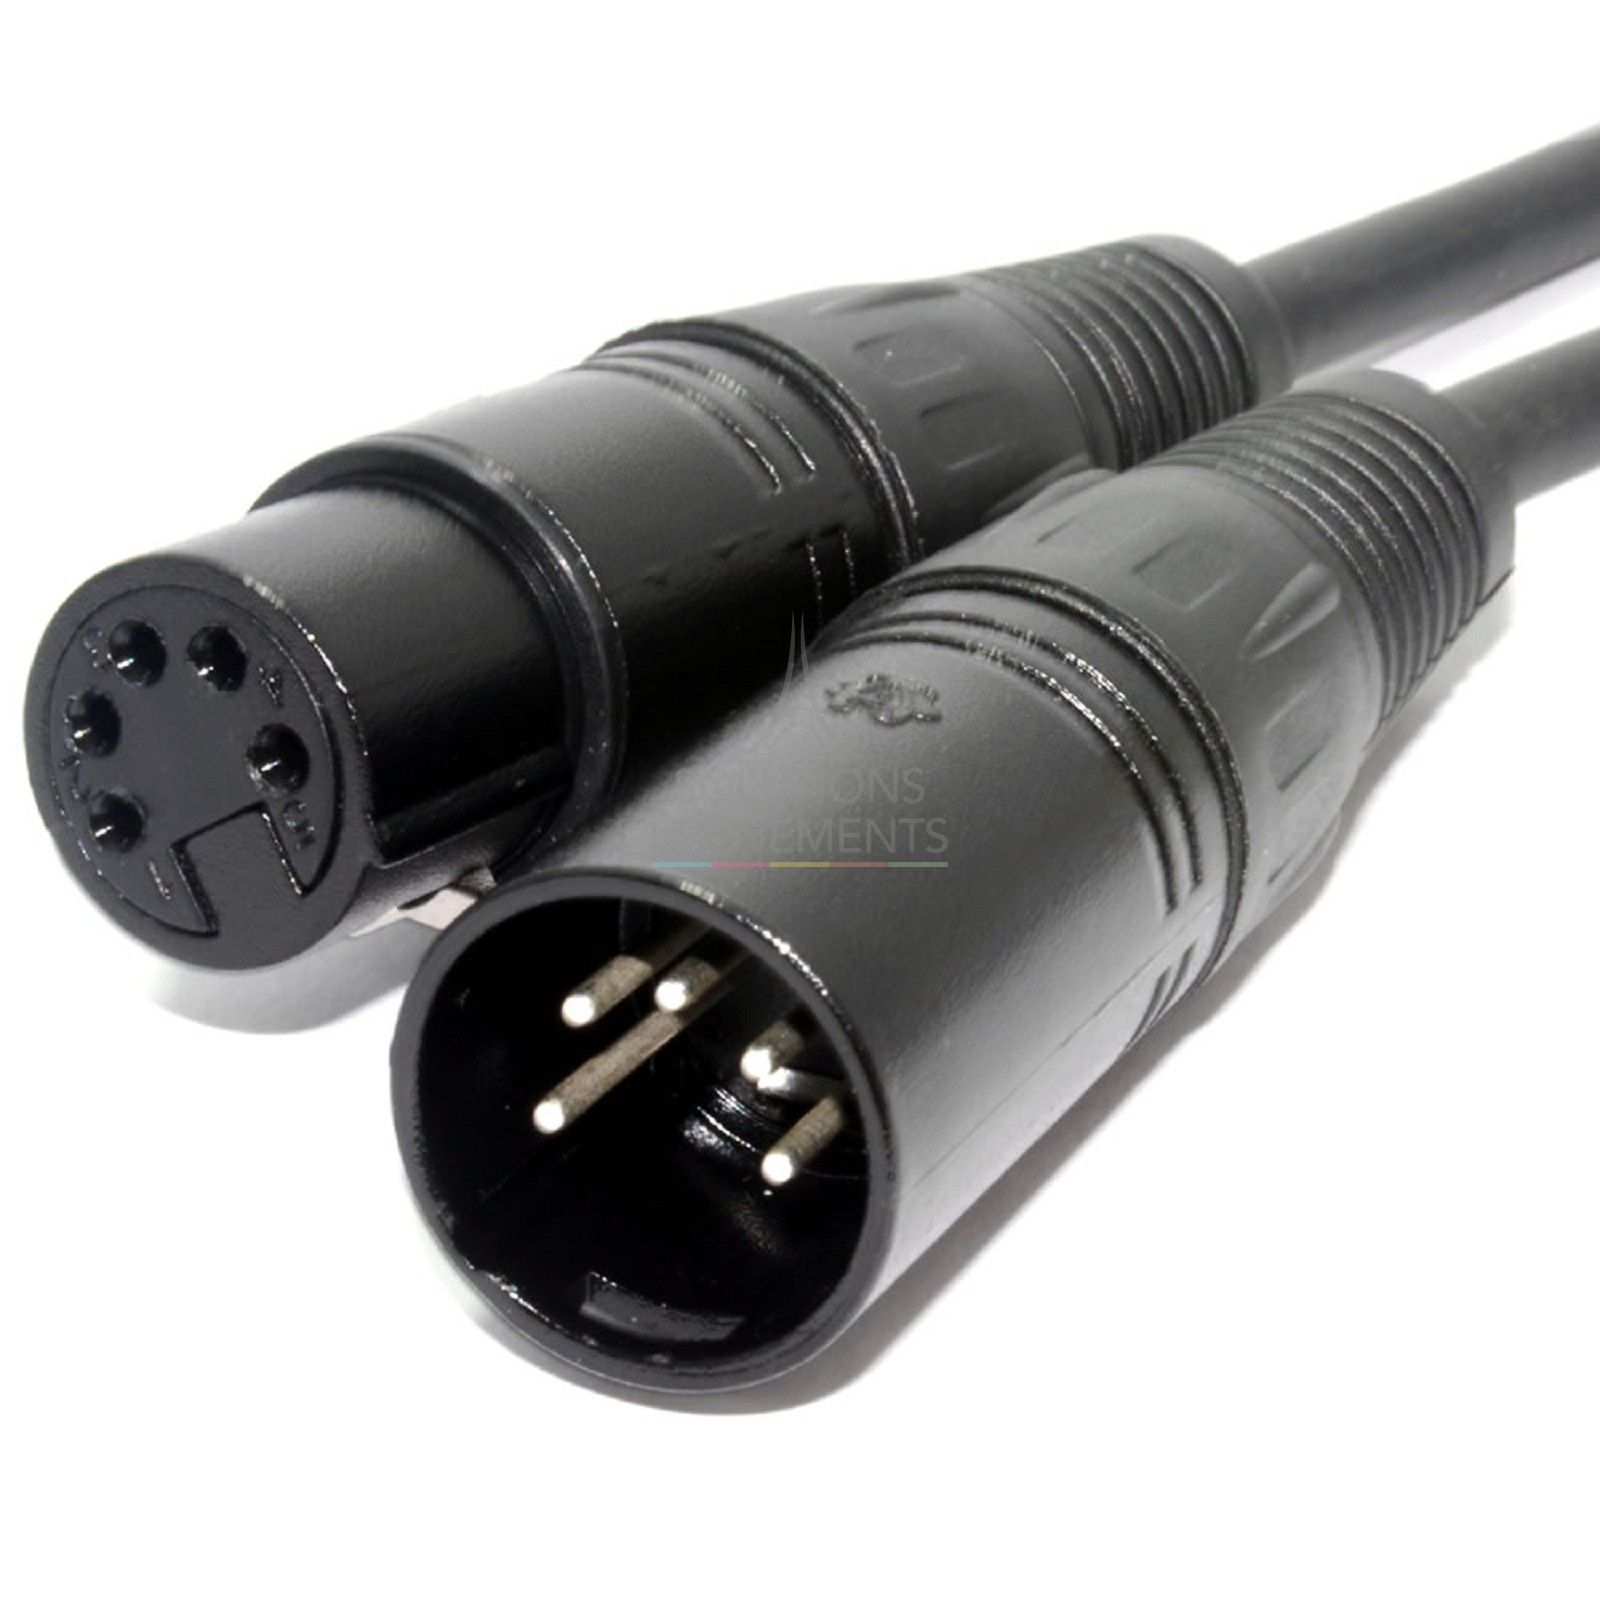 DMX cable rental 5 meter male/female XLR 5 pin